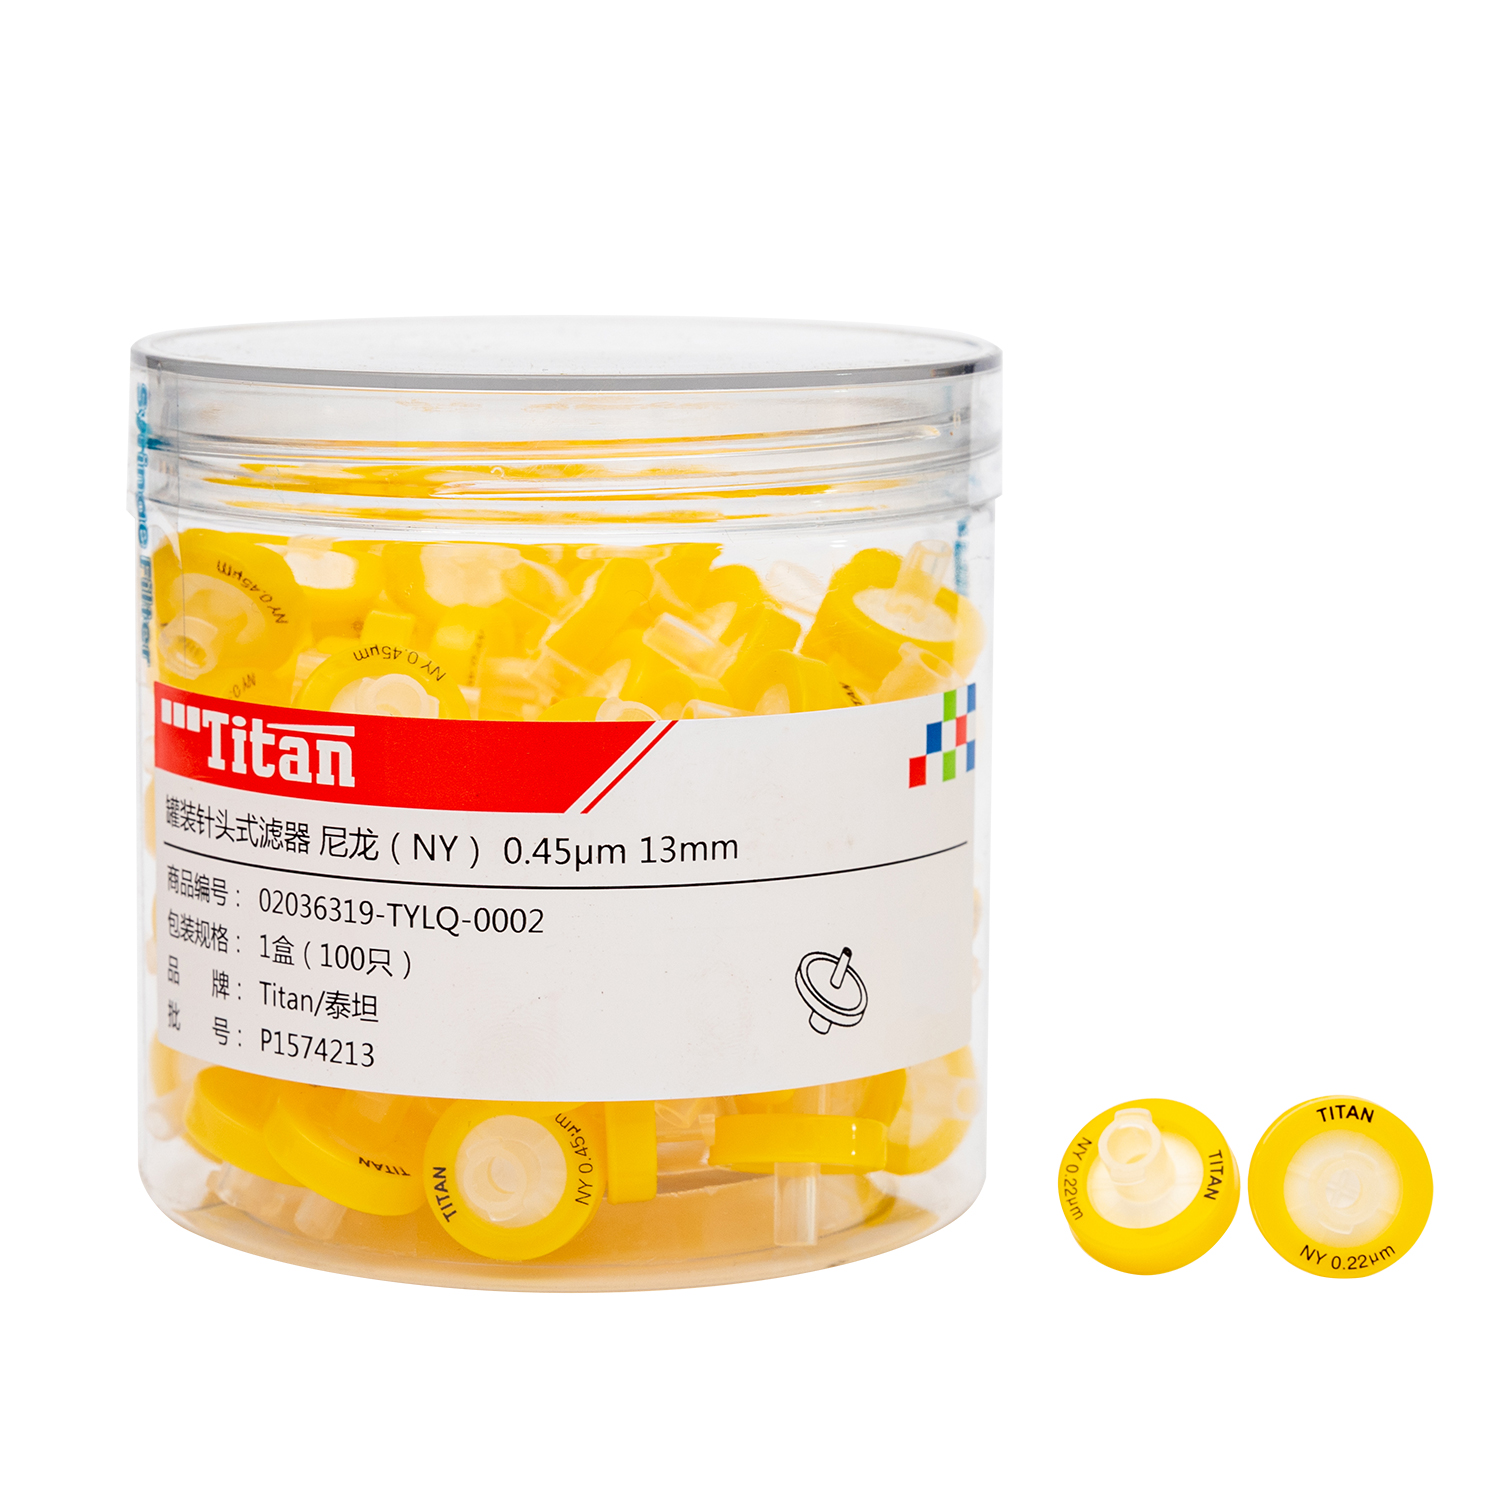 Wholesale Syringe Filters Nylon 0.45um 13mm Diameter Pore Size Box of 100 by adamas-beta